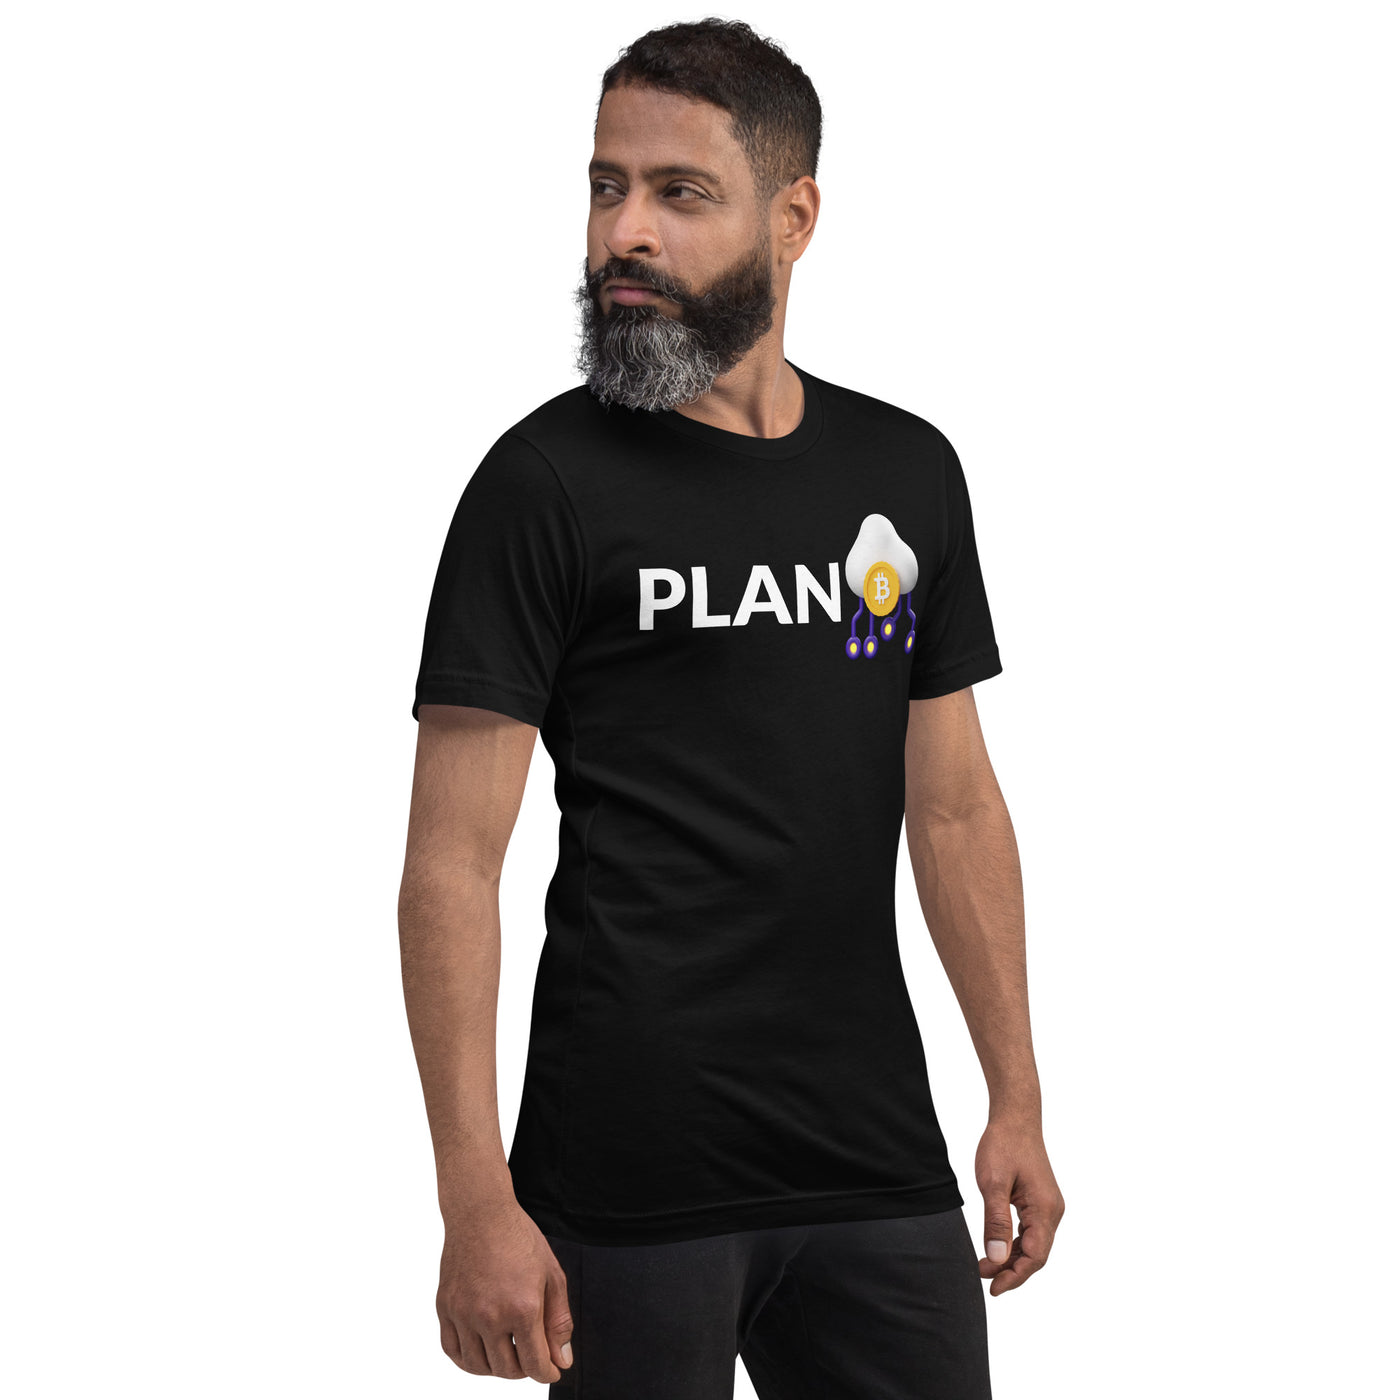 Plan B V5 - Unisex t-shirt